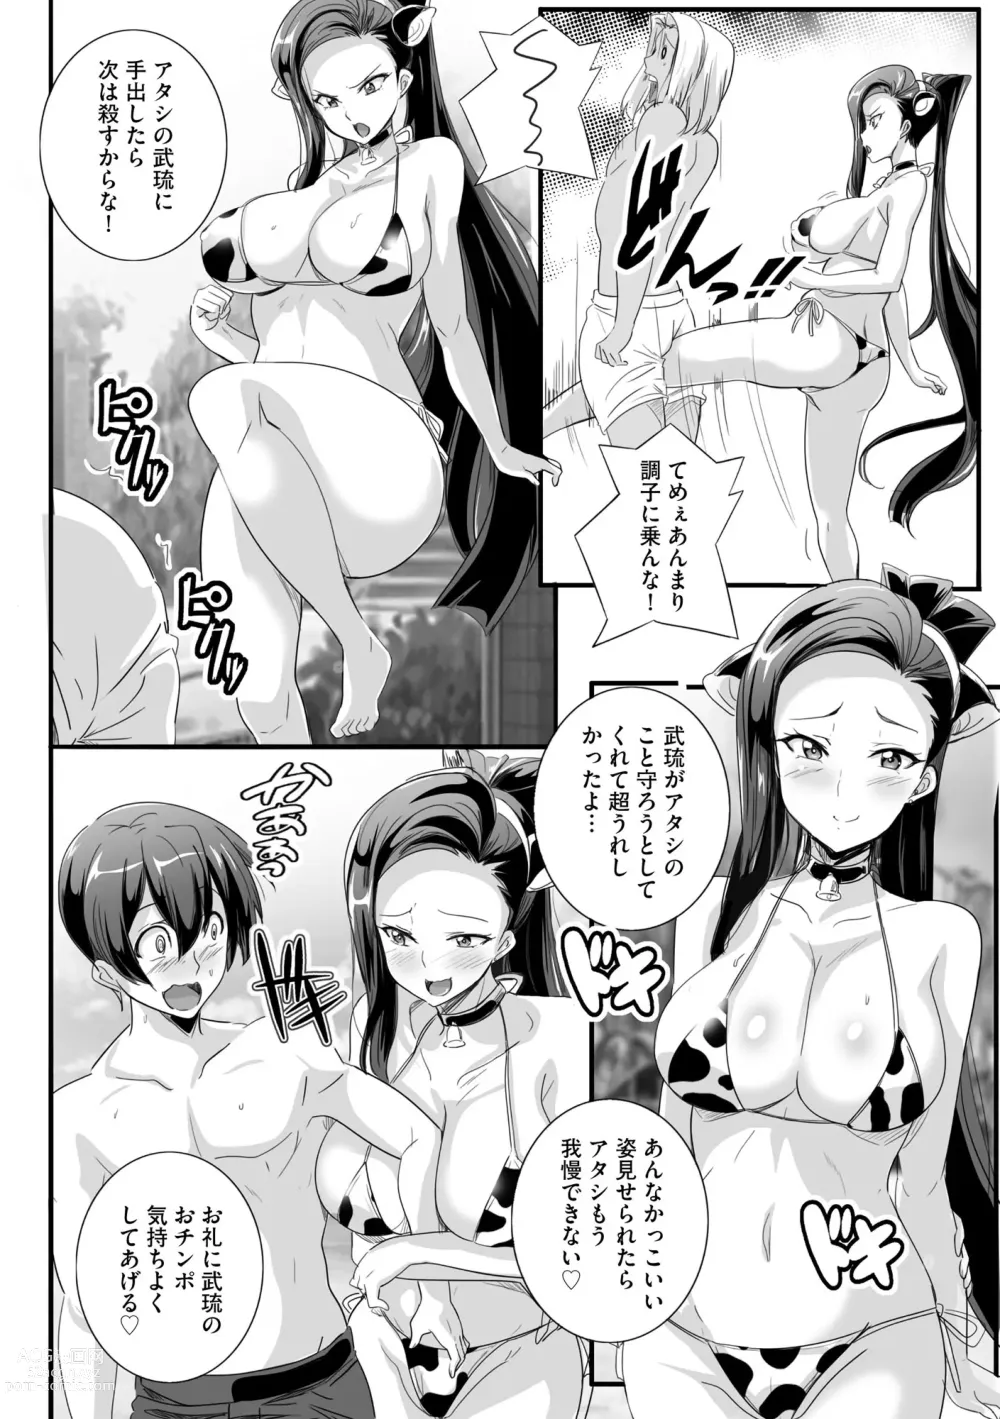 Page 14 of manga Cyberia Plus Vol. 13